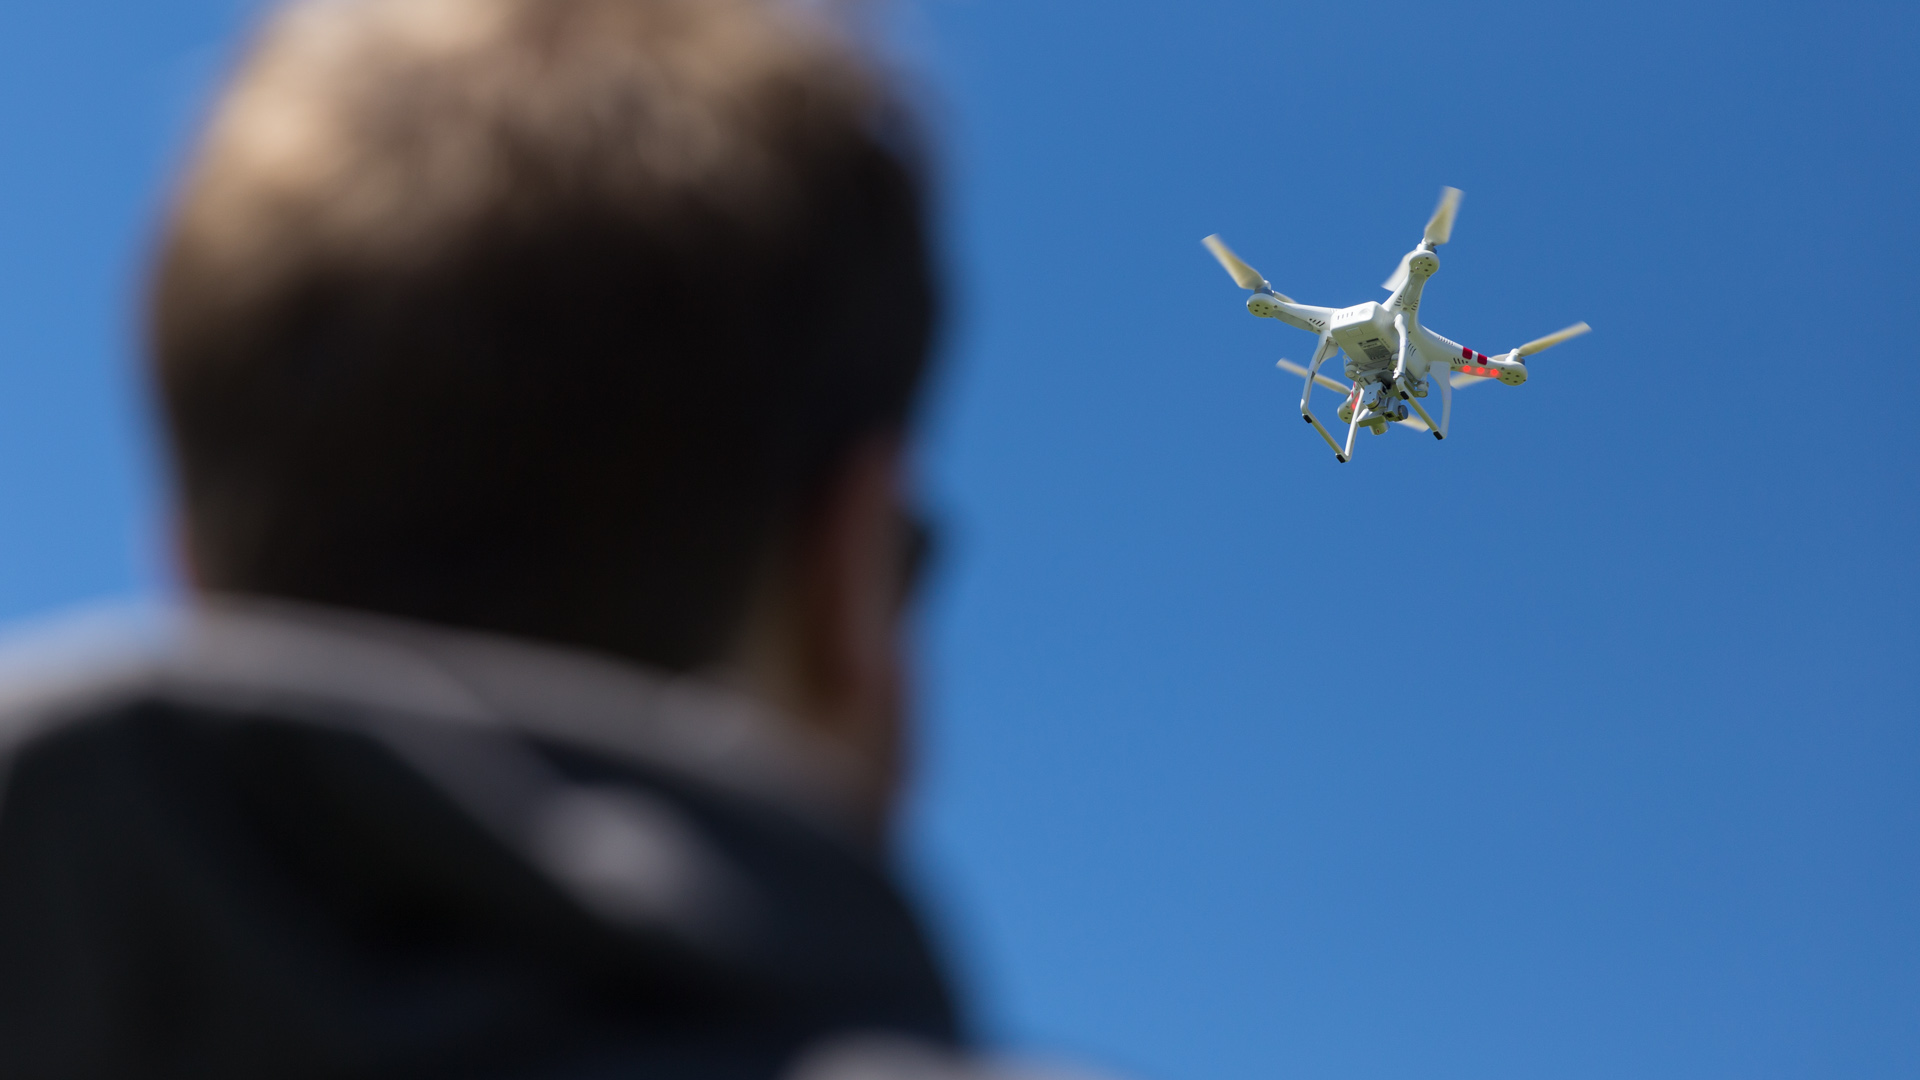 Testing: DJI Phantom 2 Vision+ Quadcopter Drone - Tested